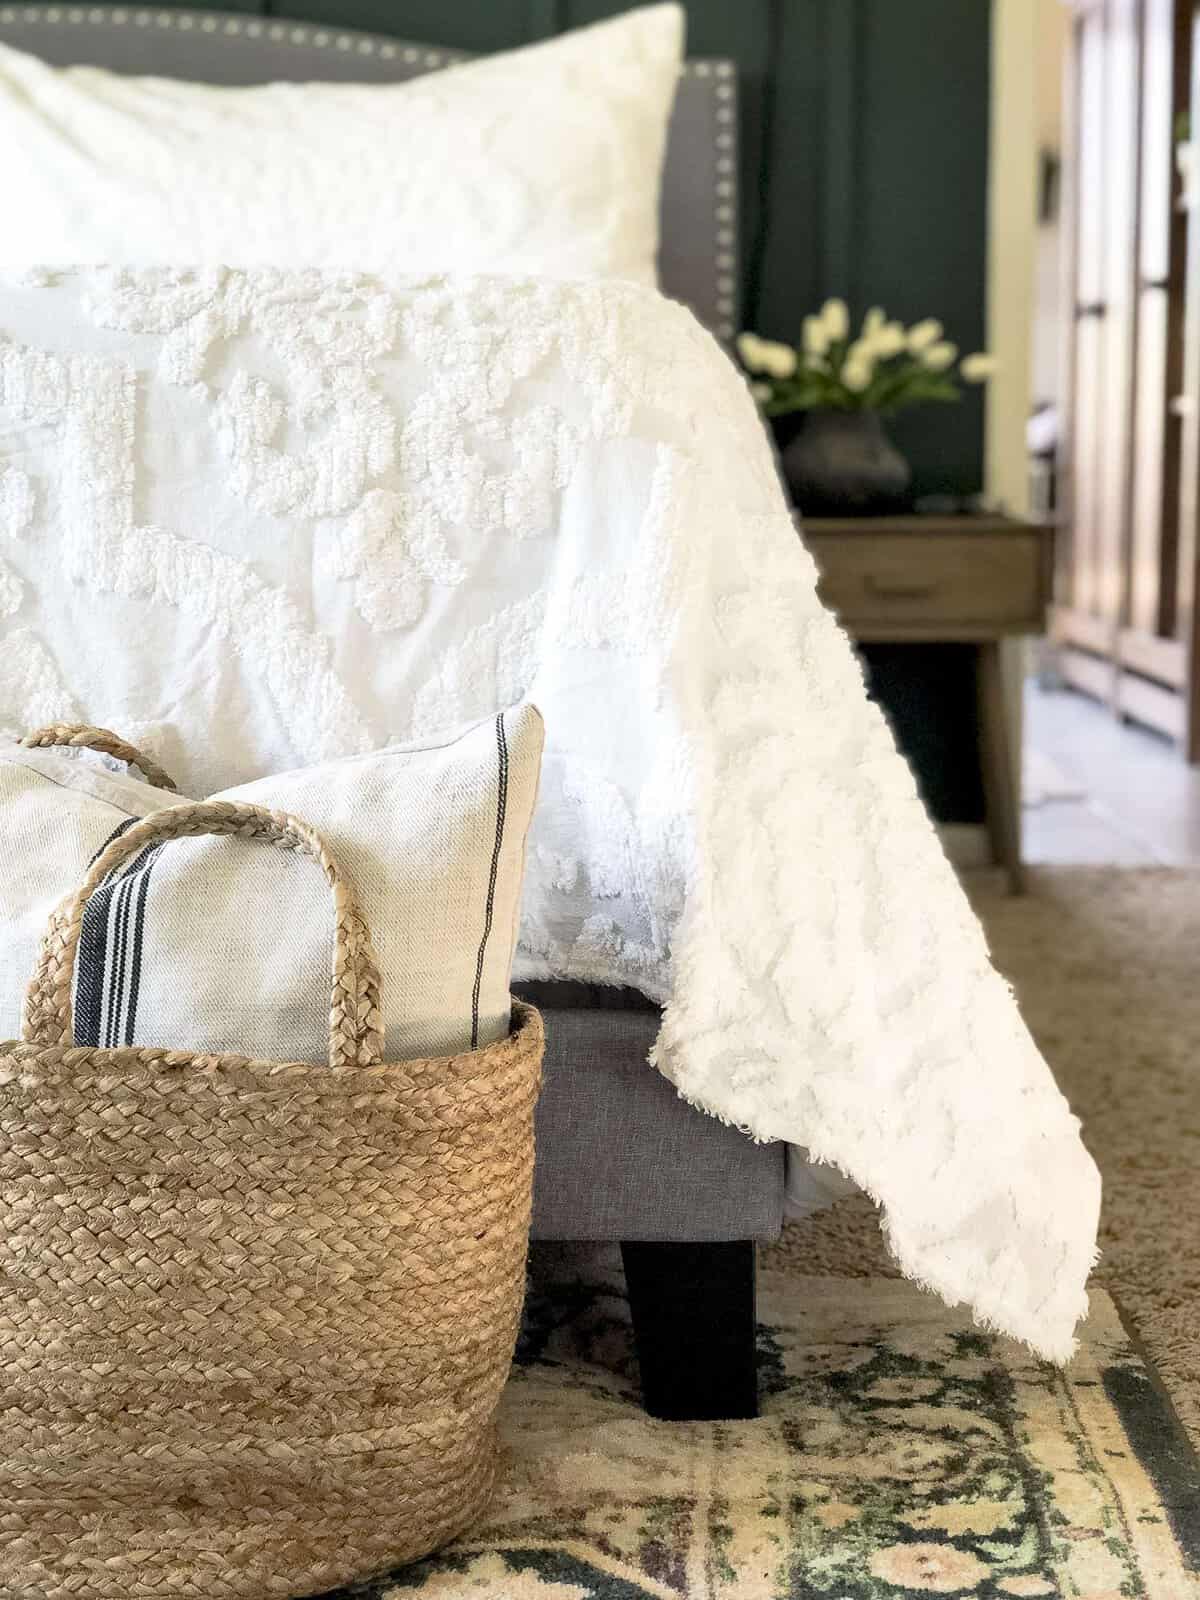 Simple basket storage for home essentials.